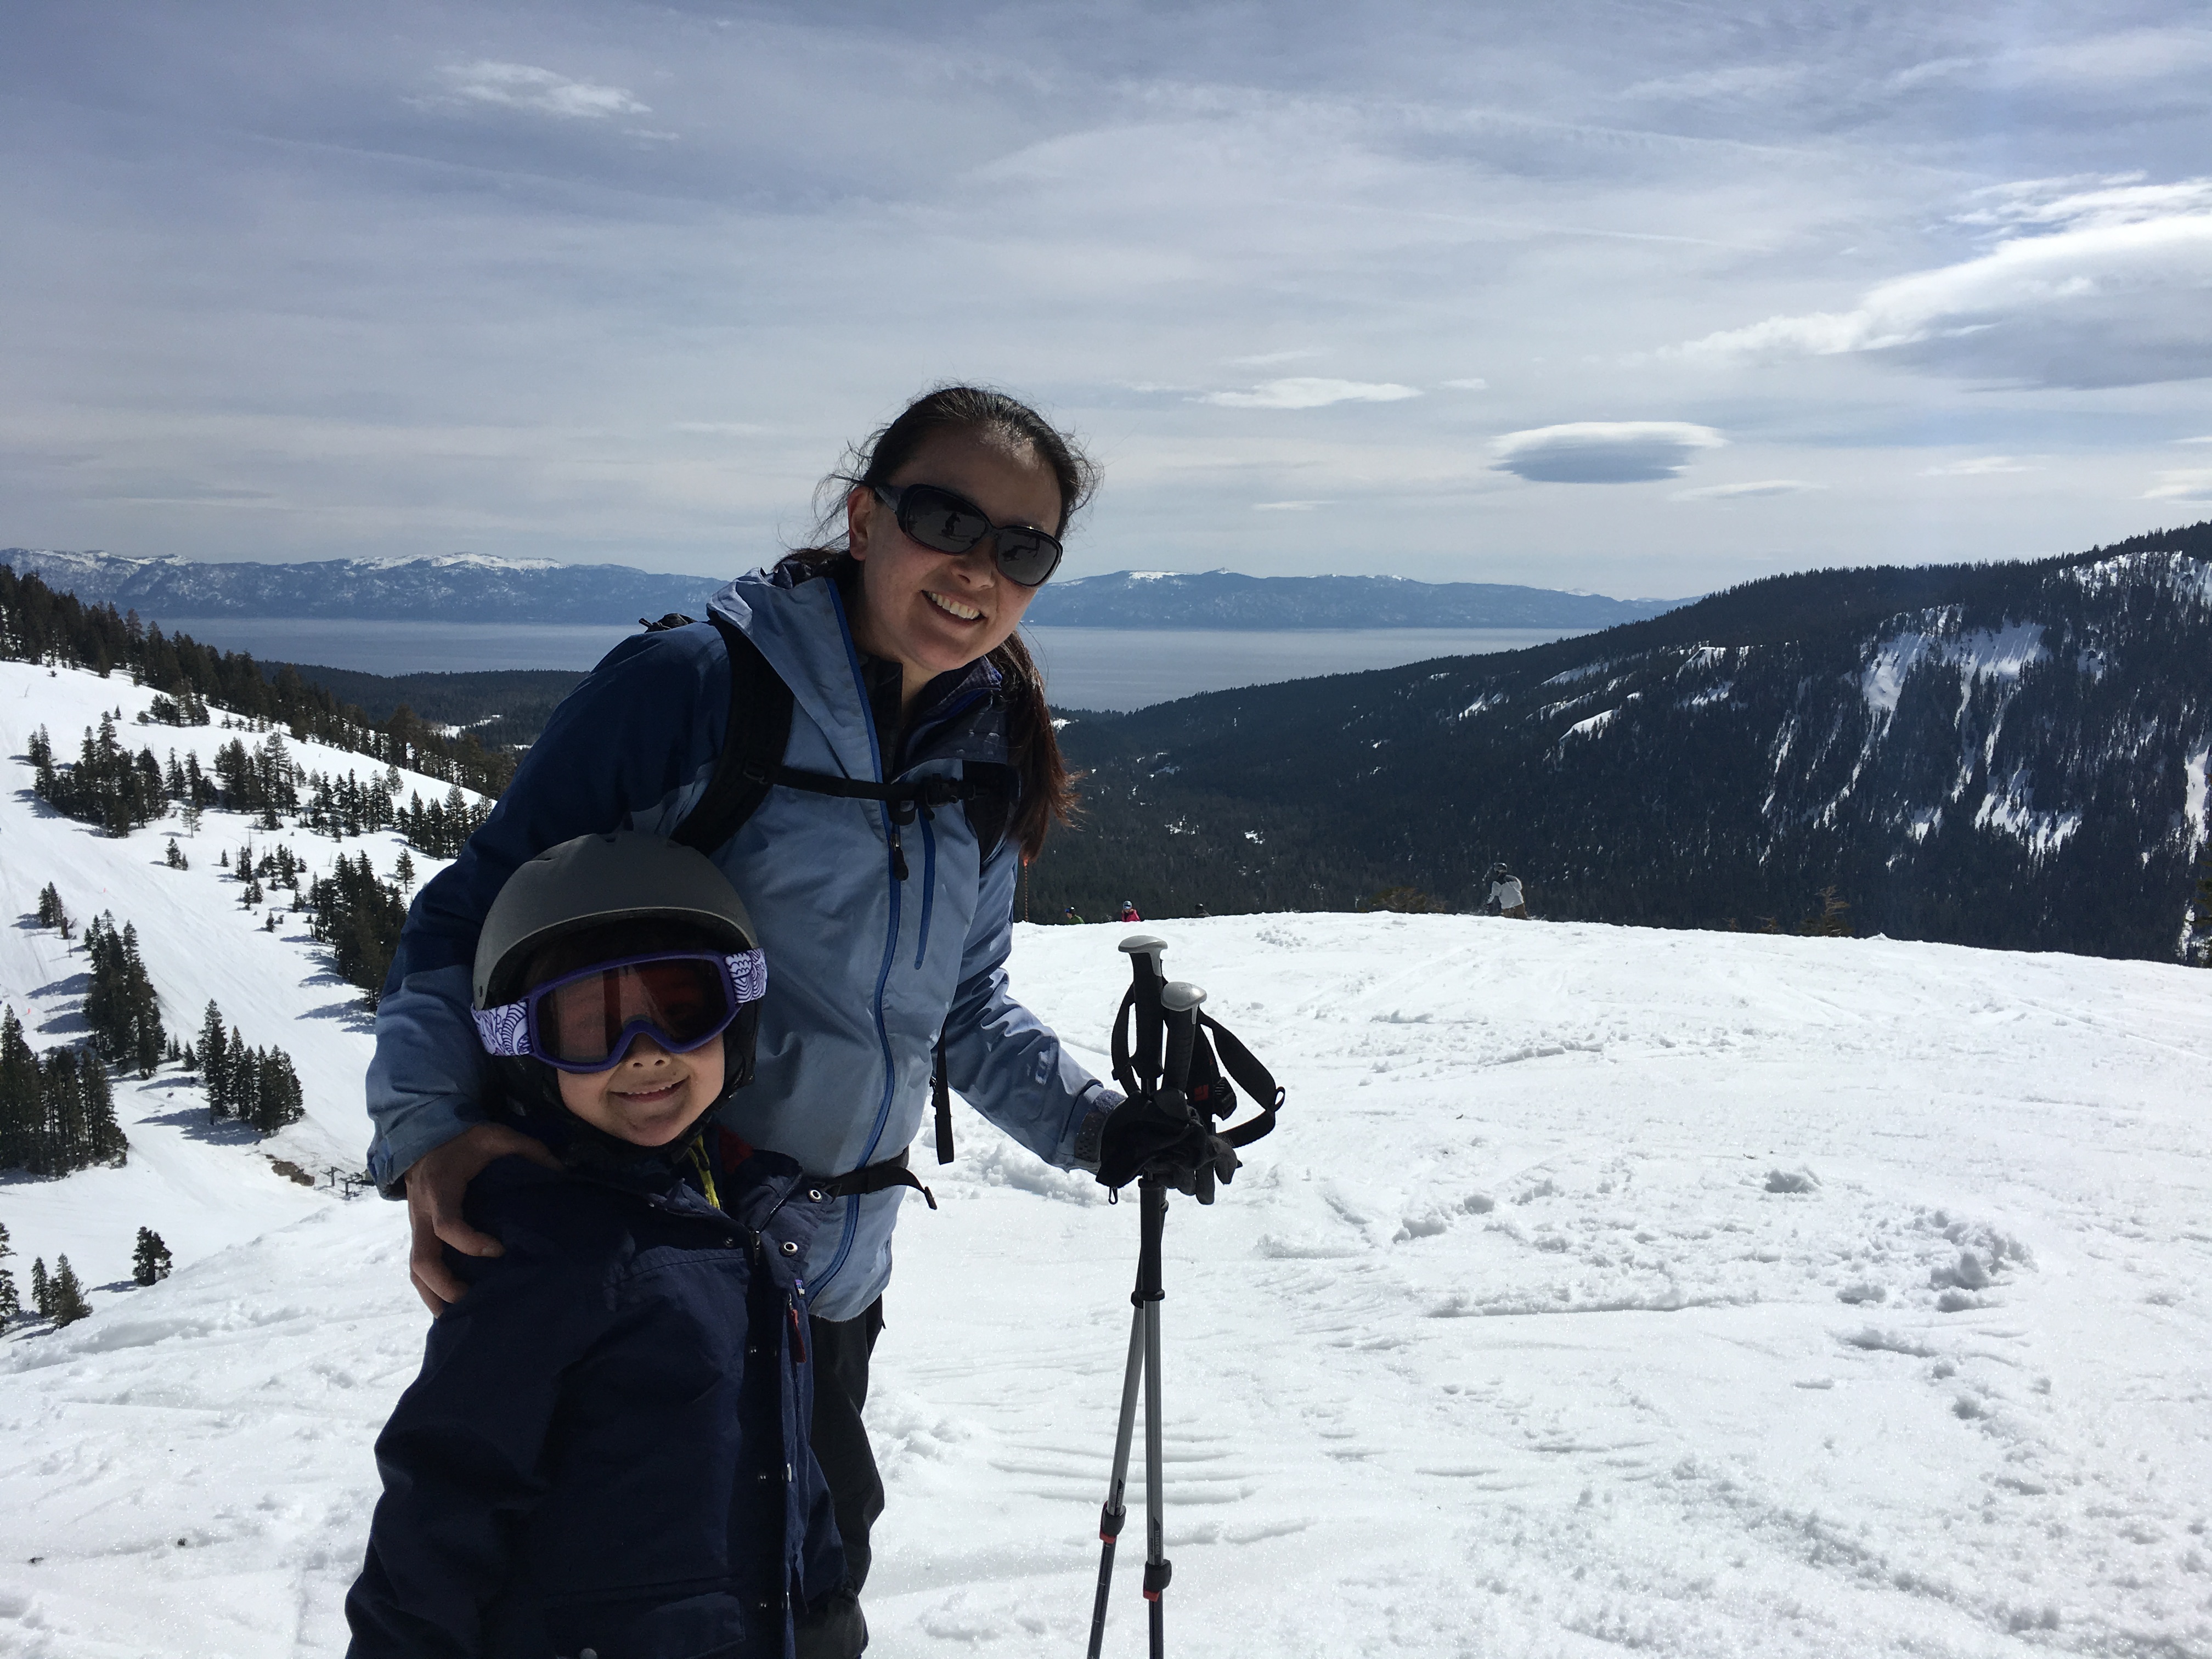 Sandi Matsumoto skiing with her son in Sierra Nevada.